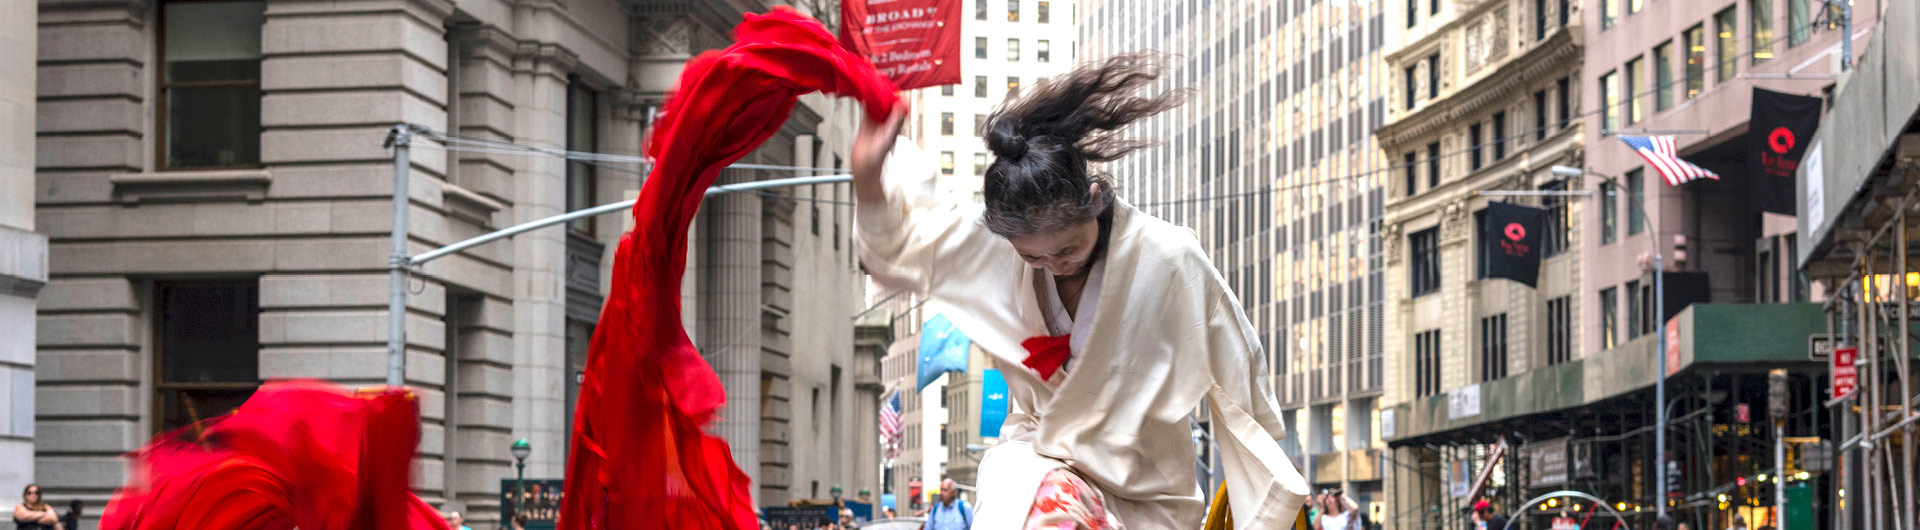 Eiko Otake dancing with red fabric on Wall Street